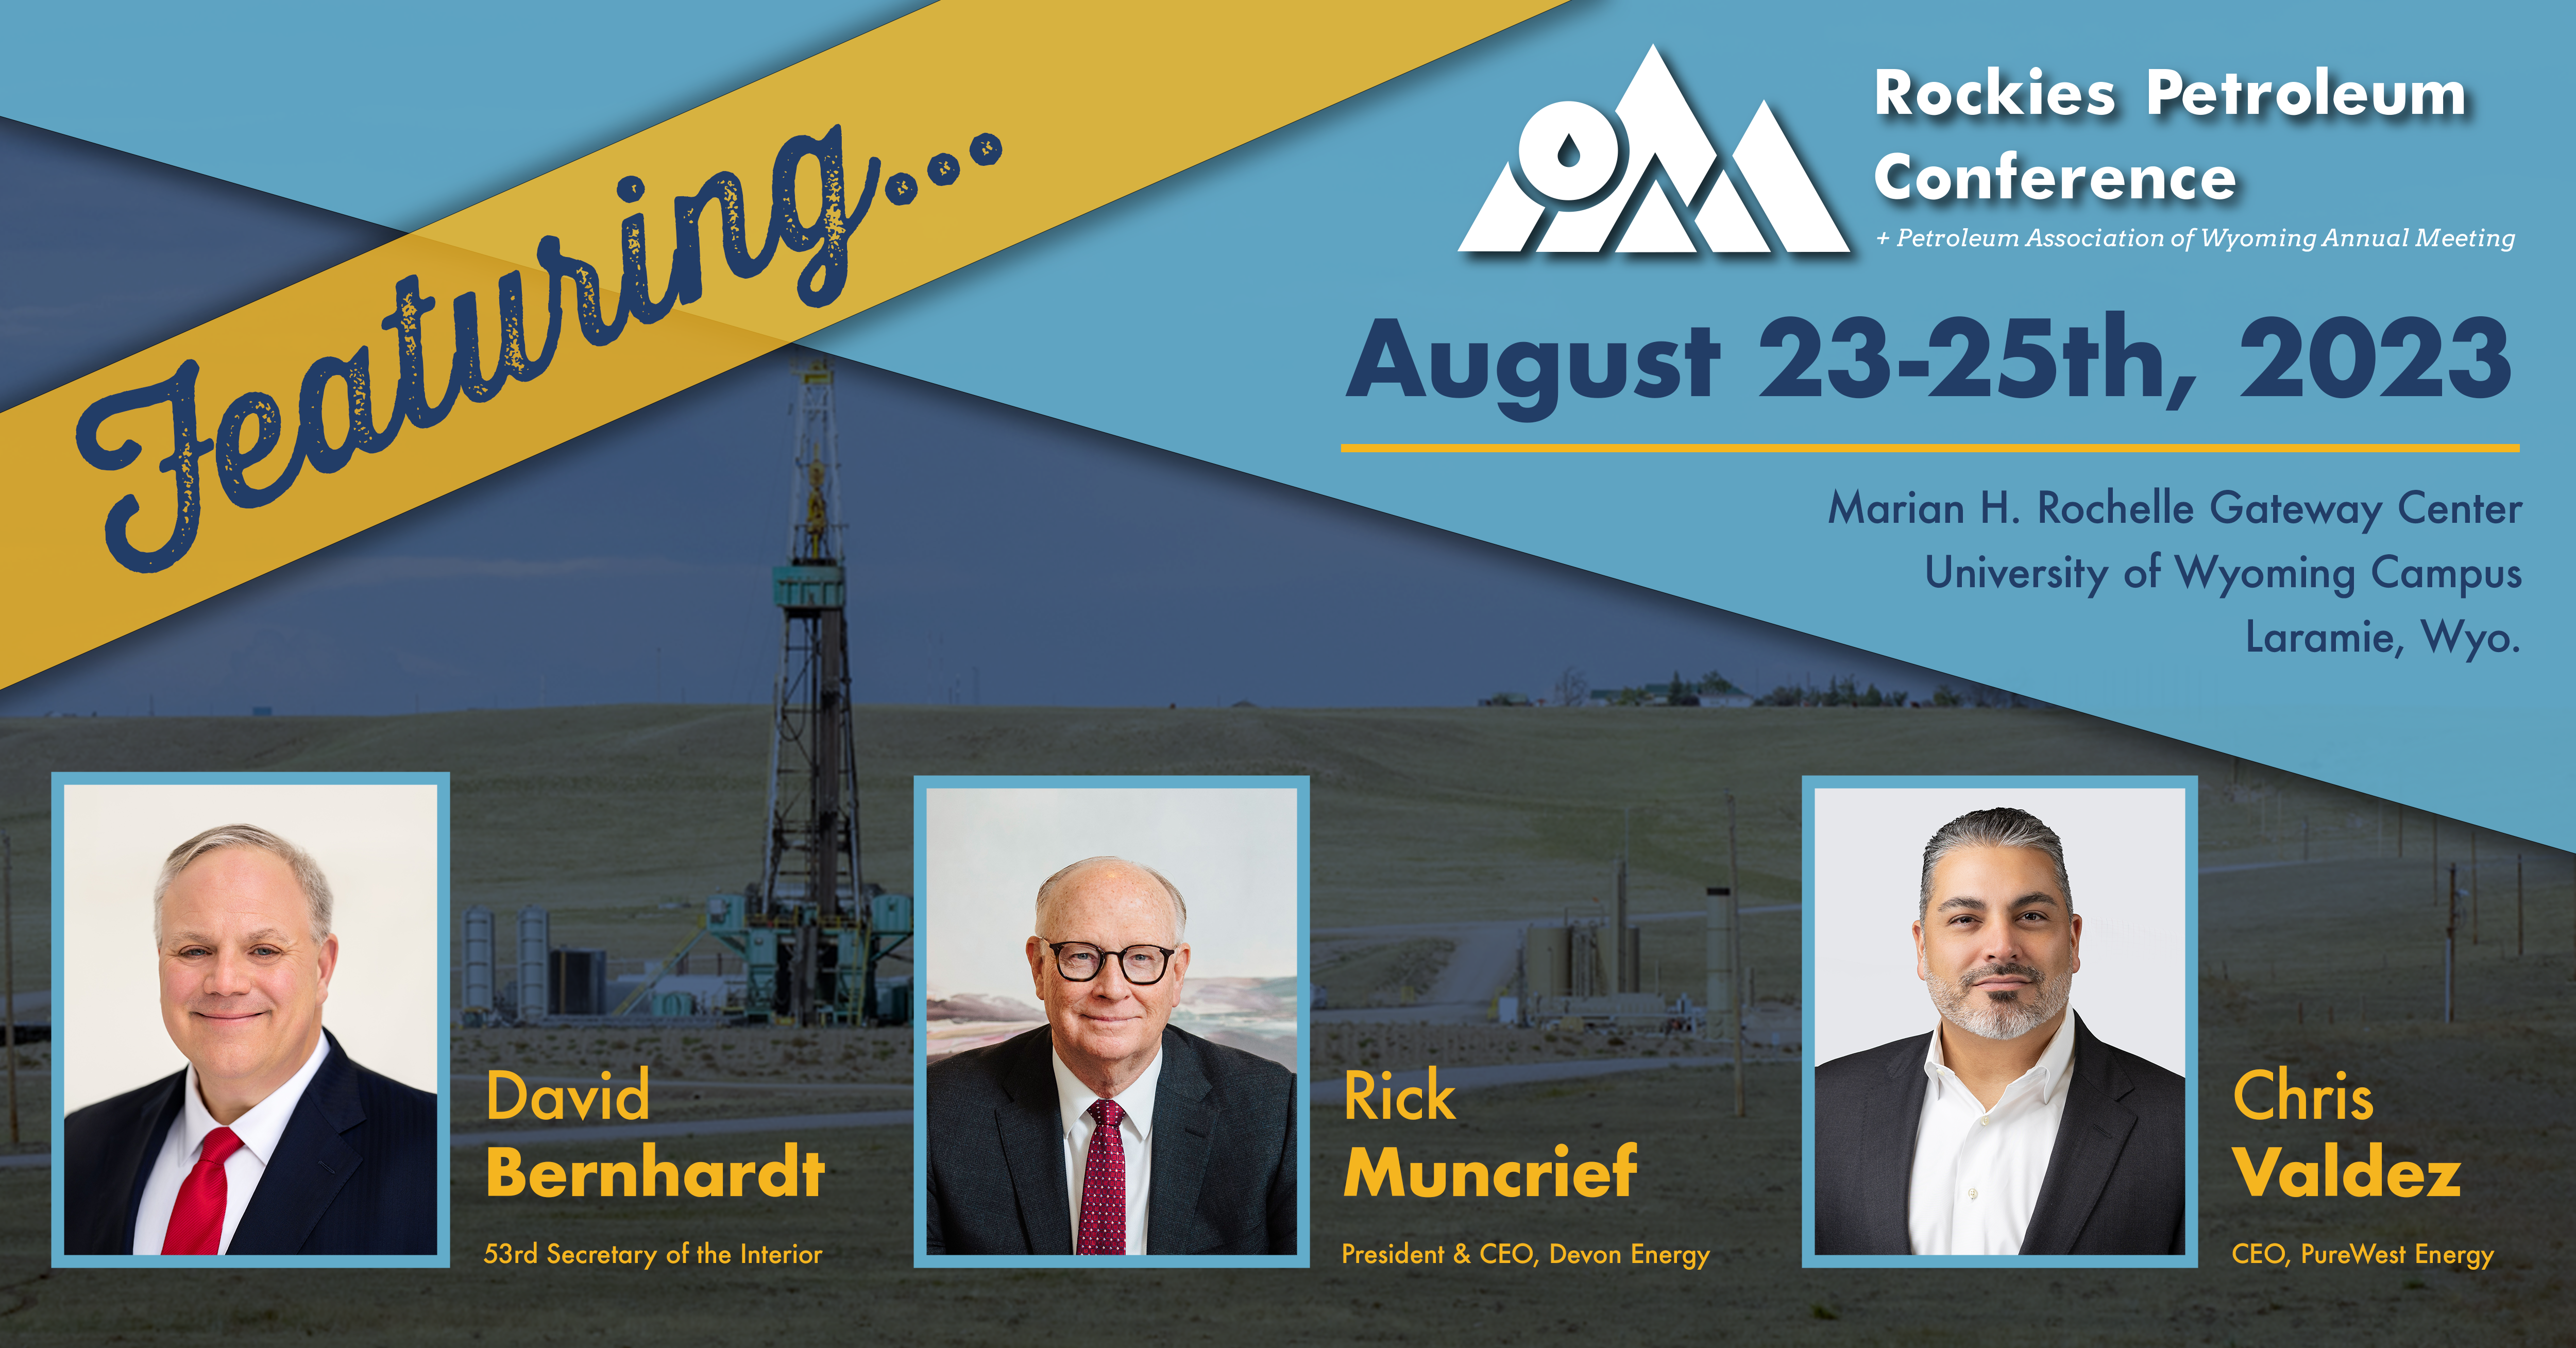 2023 Rockies Petroleum Conference